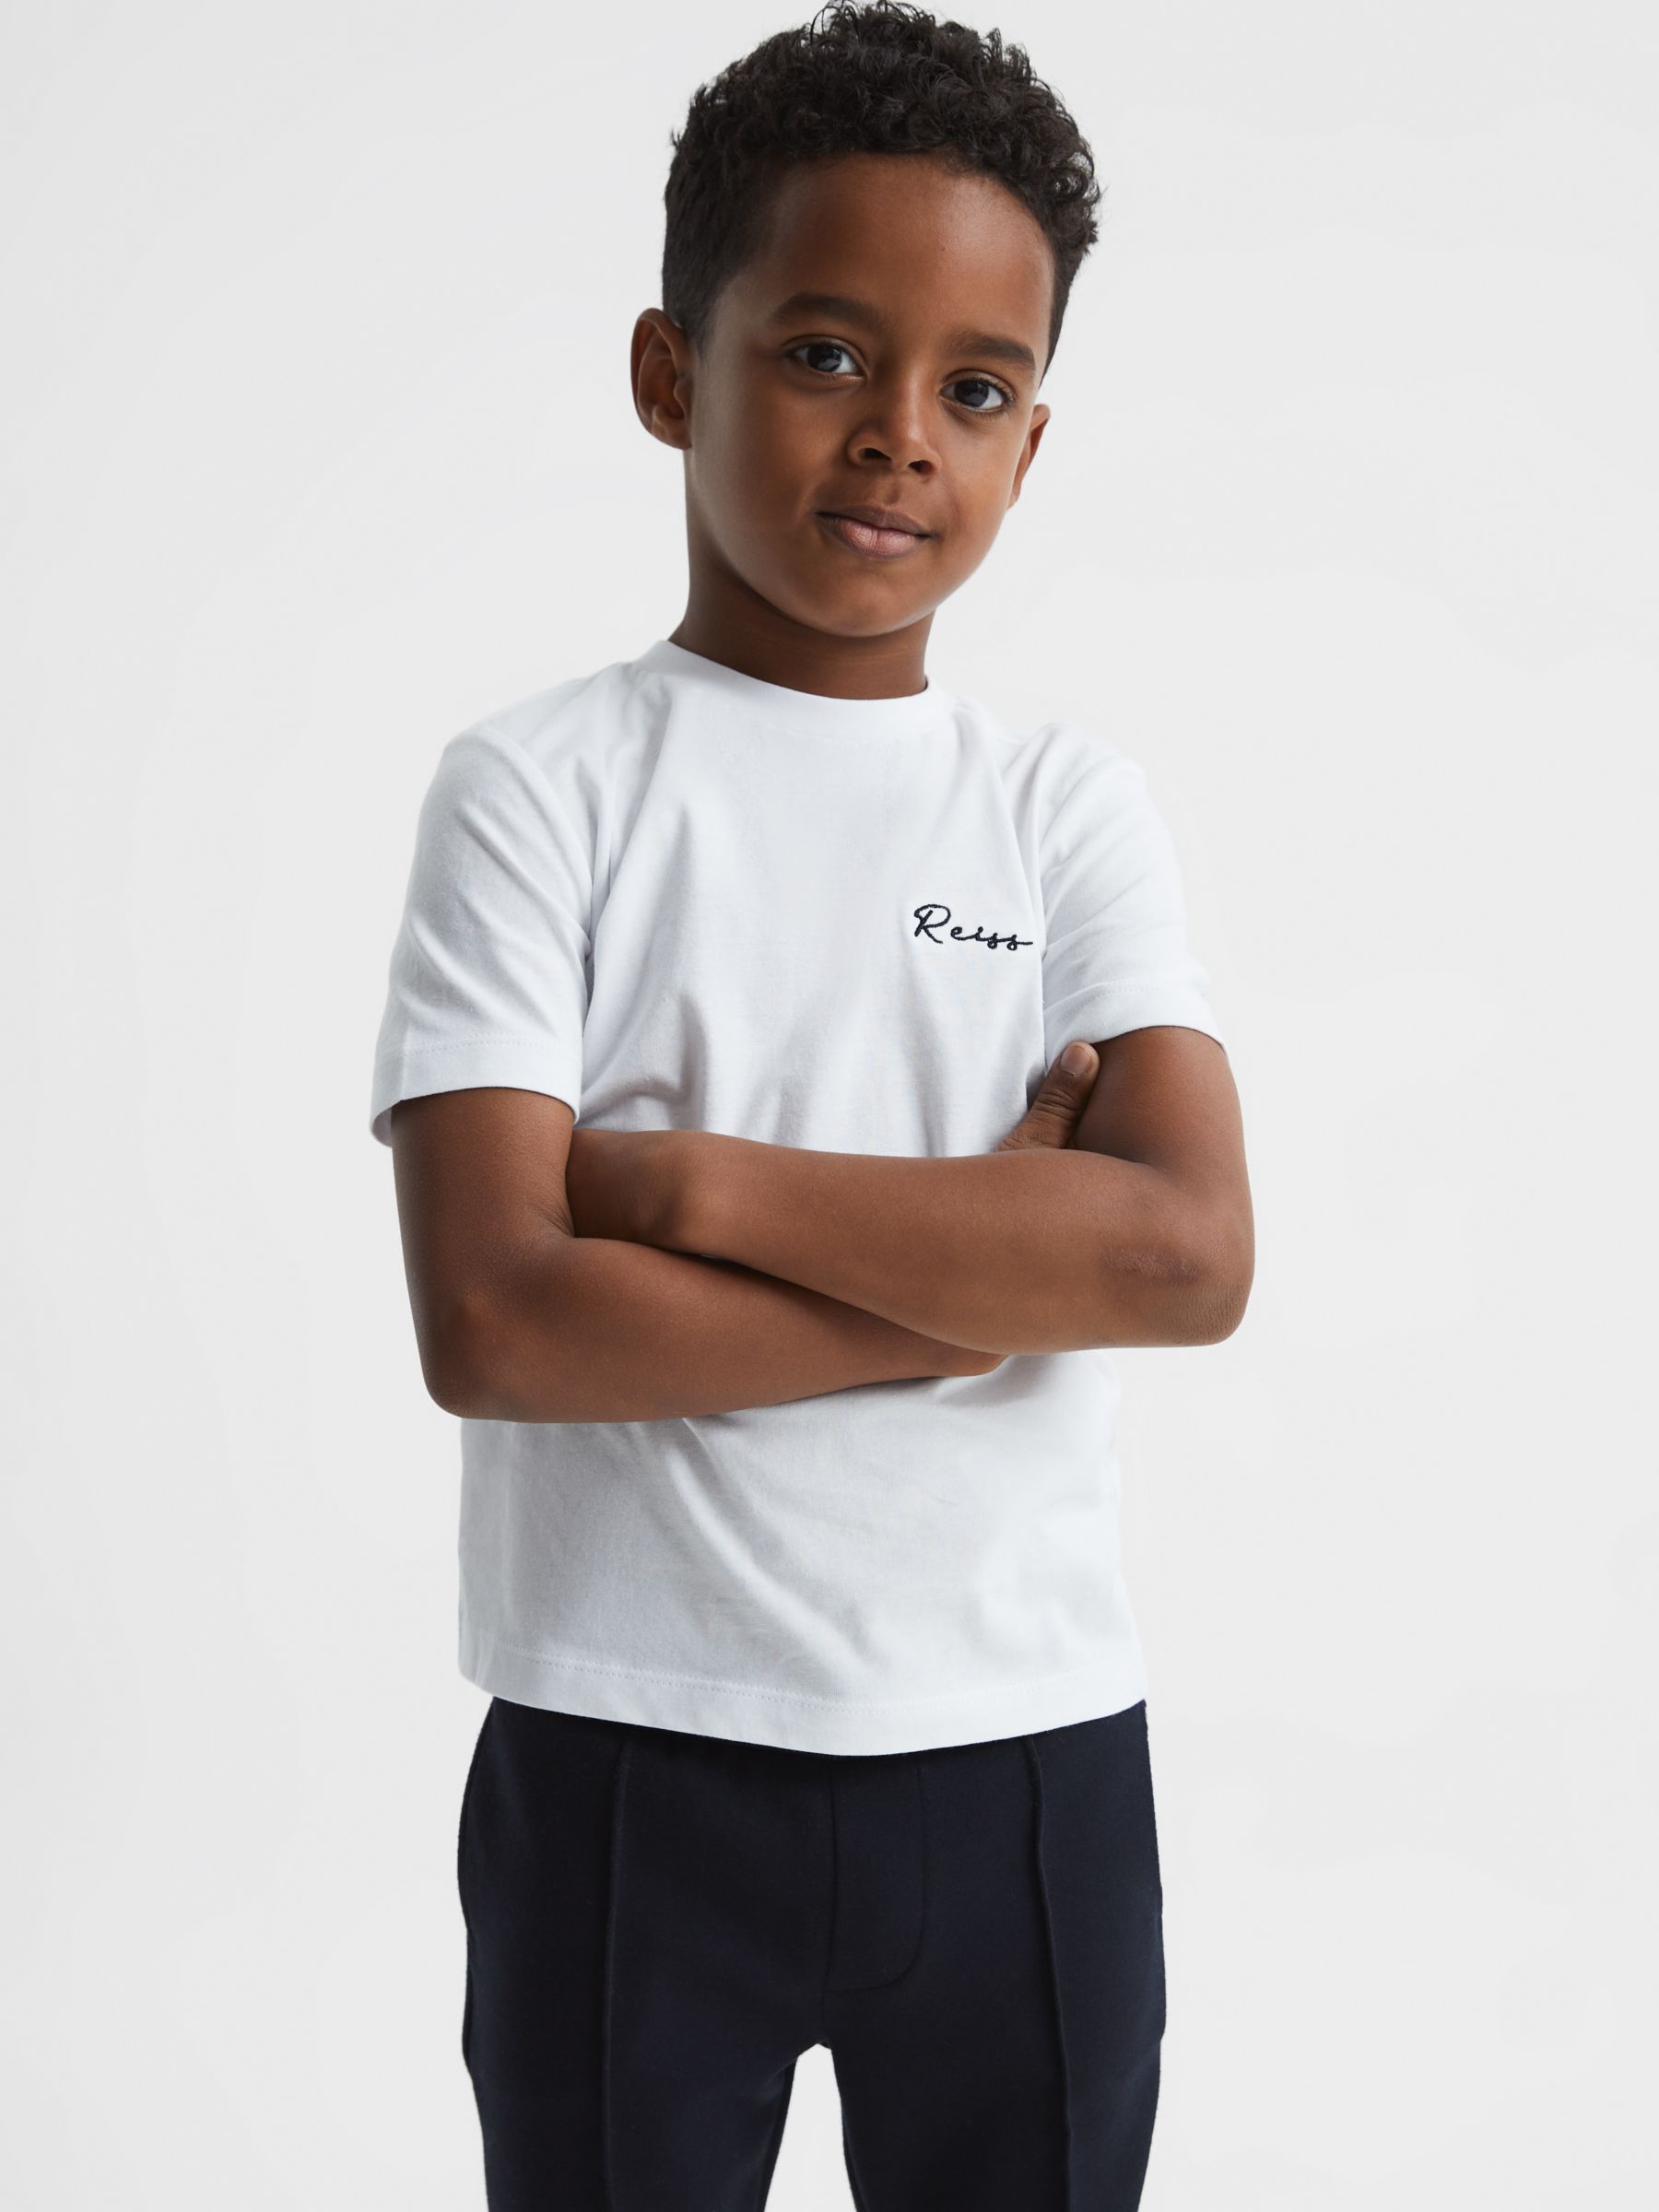 Reiss Kids' Todd Embroidery Logo Cotton T-Shirt, White/Navy at John ...